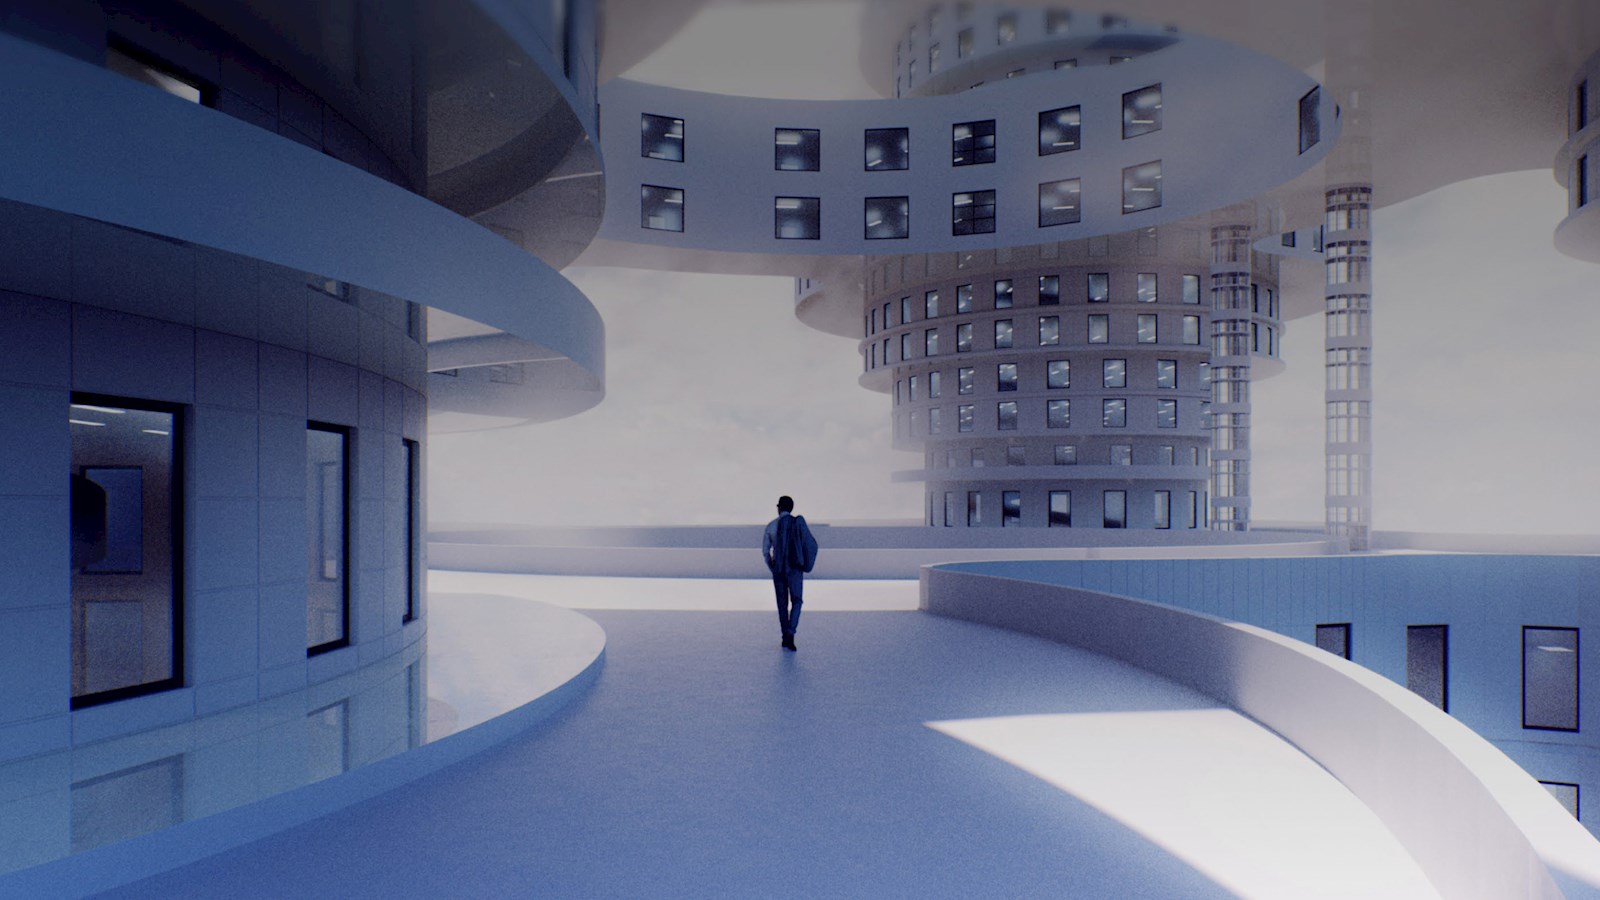 Man walking by futuristic office buildings 